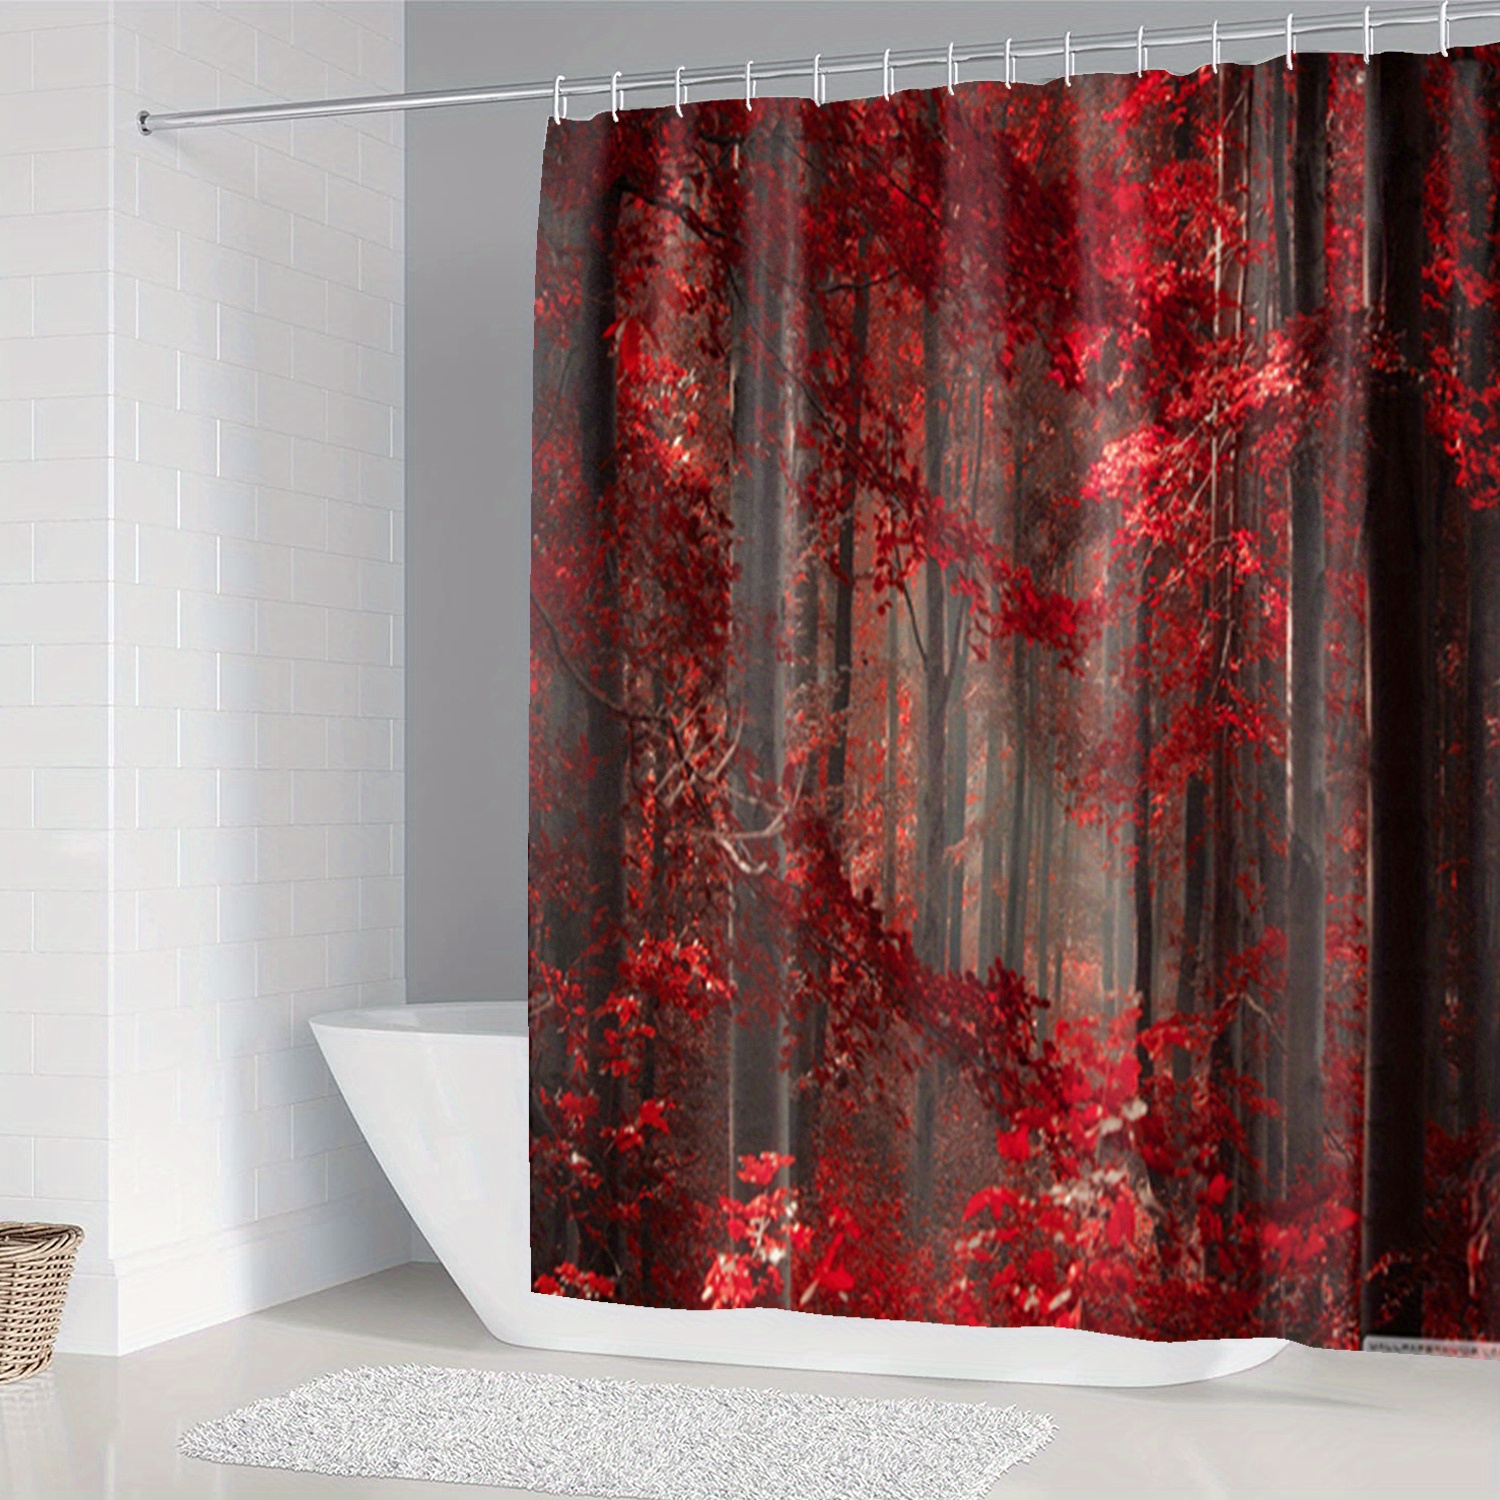 Eczjnt Little Red Fox in Autumn Shower Curtain Bathroom Waterproof Home Decor 48x72 inch, Size: 48 x 72